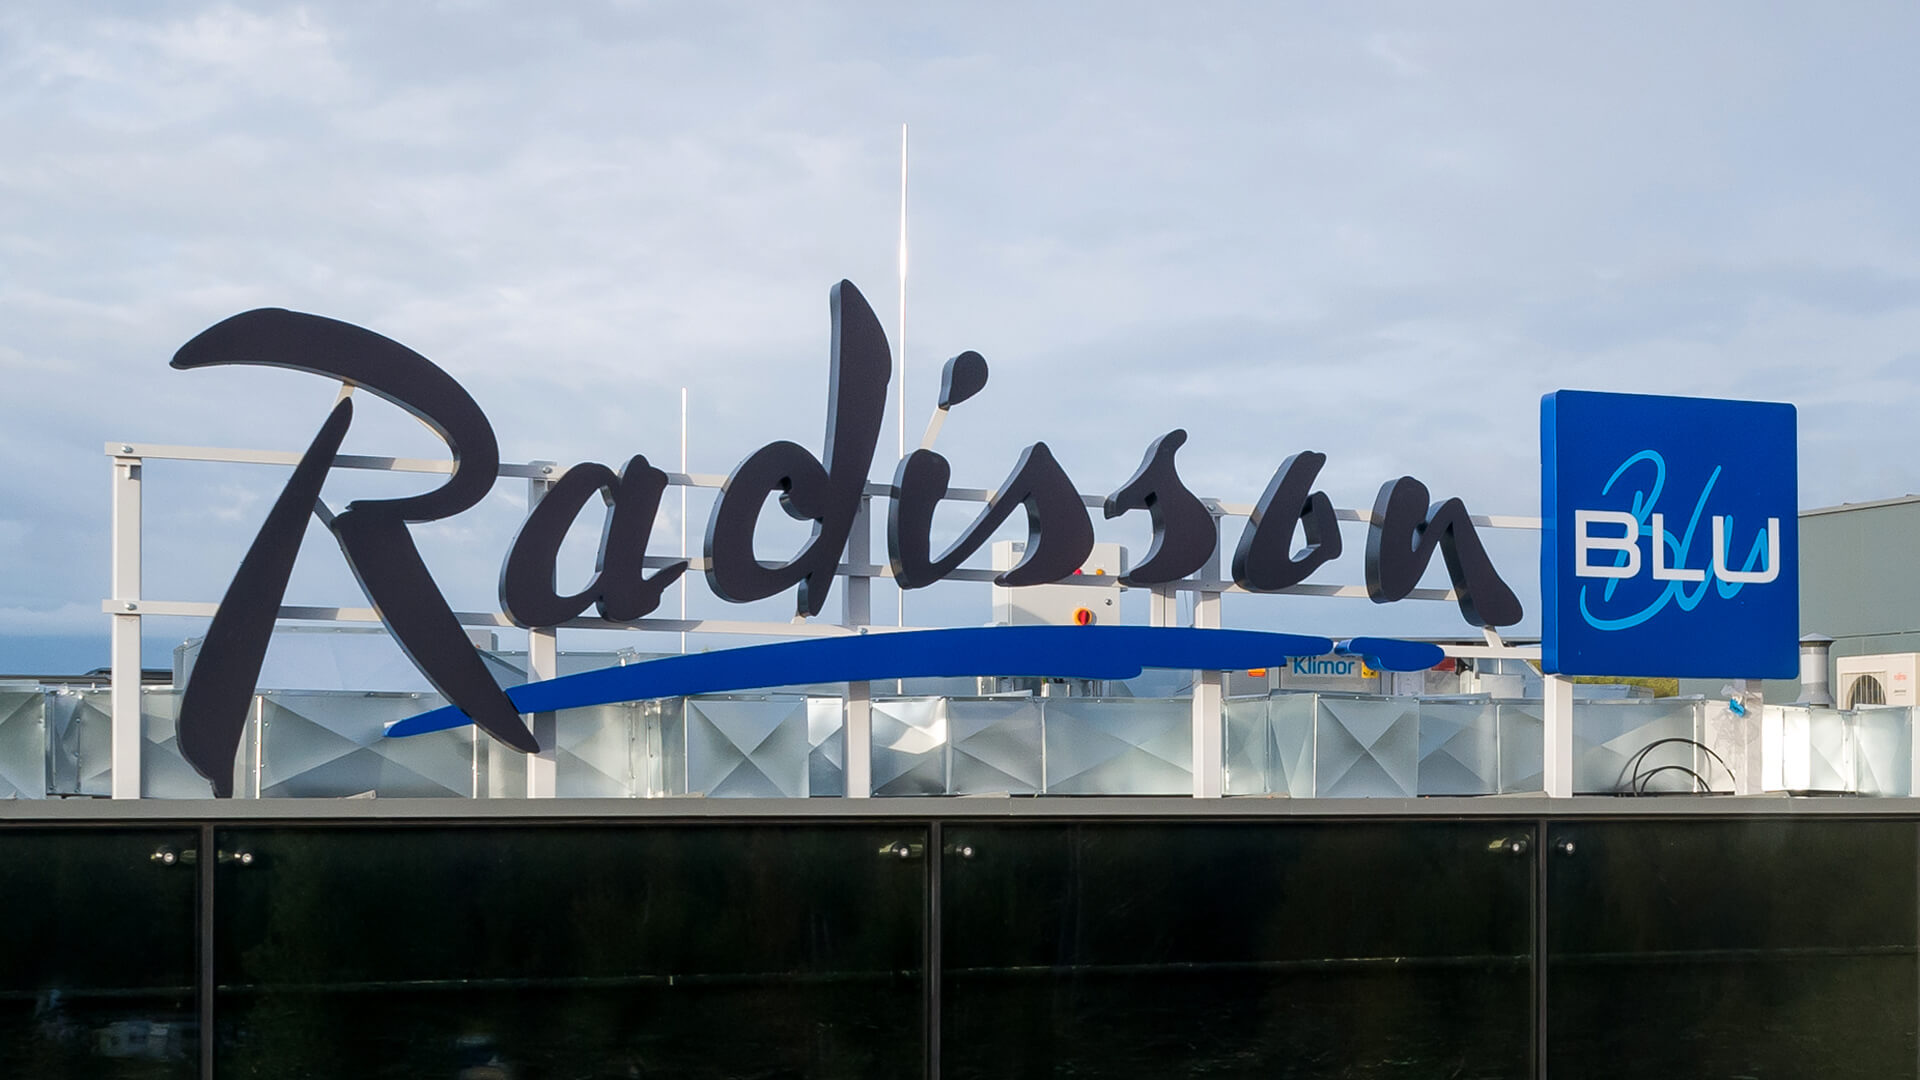 radisson-blu-sopot-letters-black - & - whte radisson - letters-black&white-under-light-led-advertising-logos-radisson-blu-sopot-space-letters-block-letters-on-metal-construction